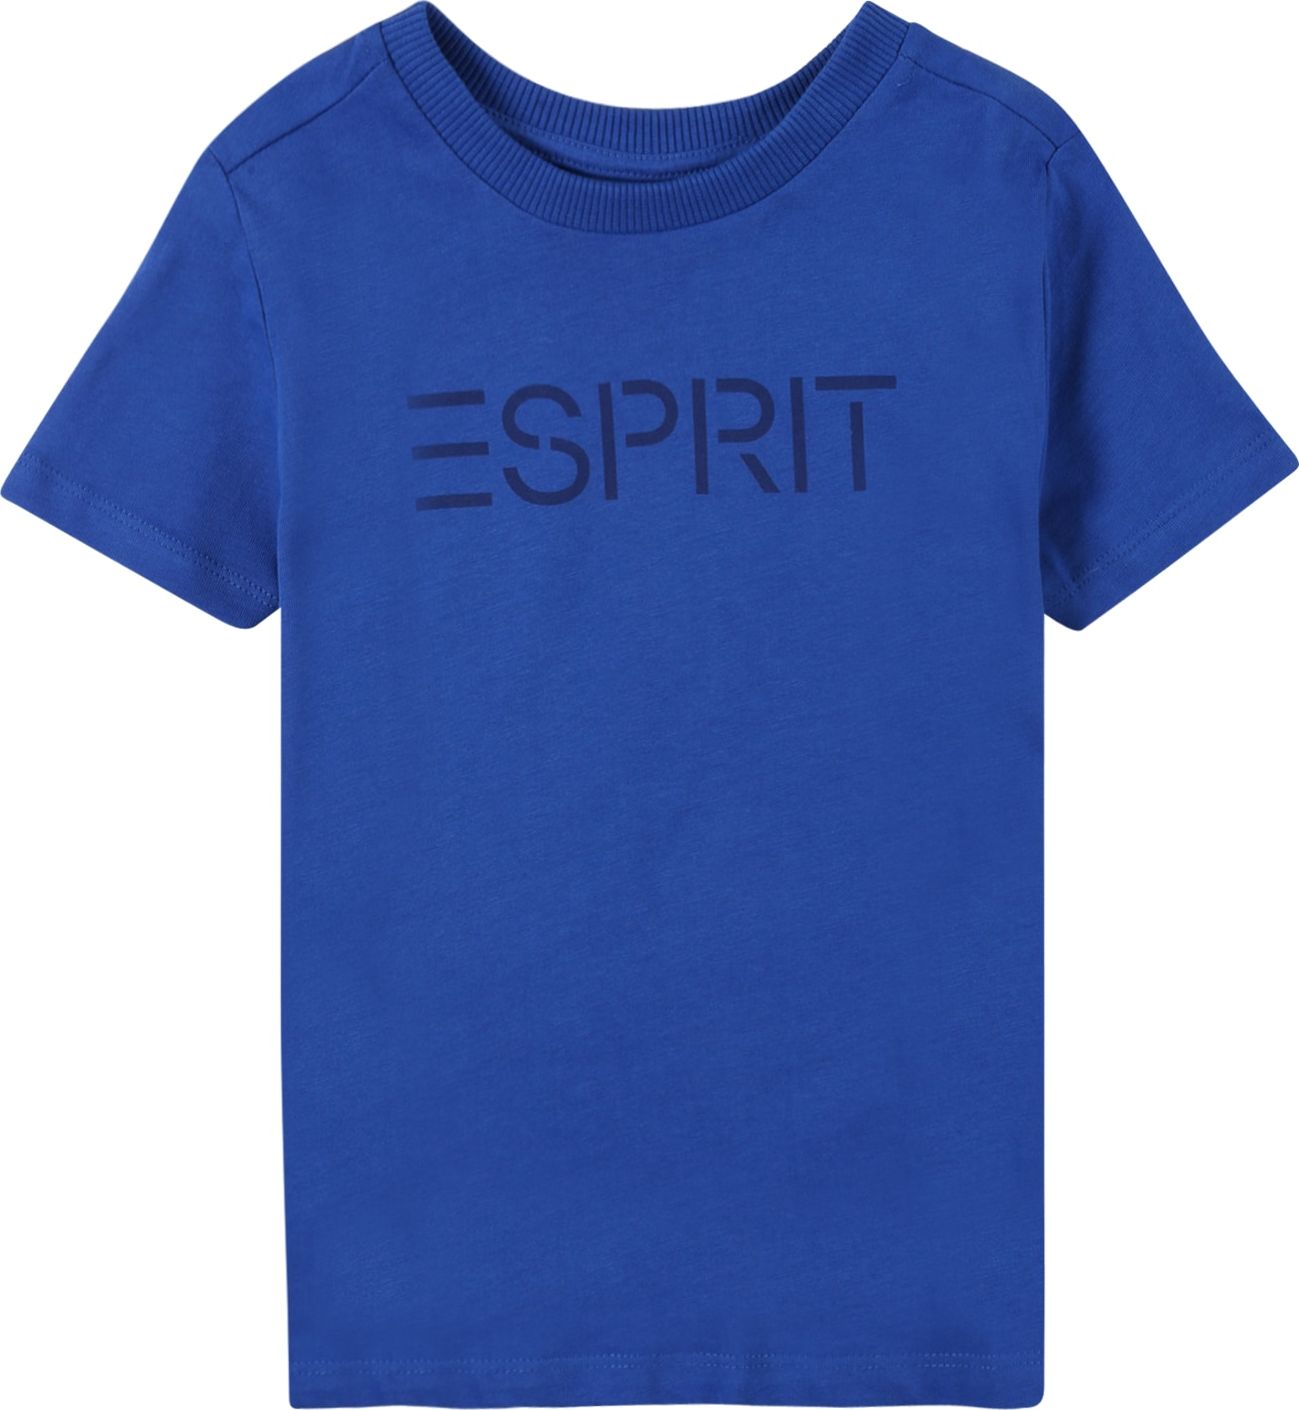 ESPRIT Tričko modrá / tmavě modrá